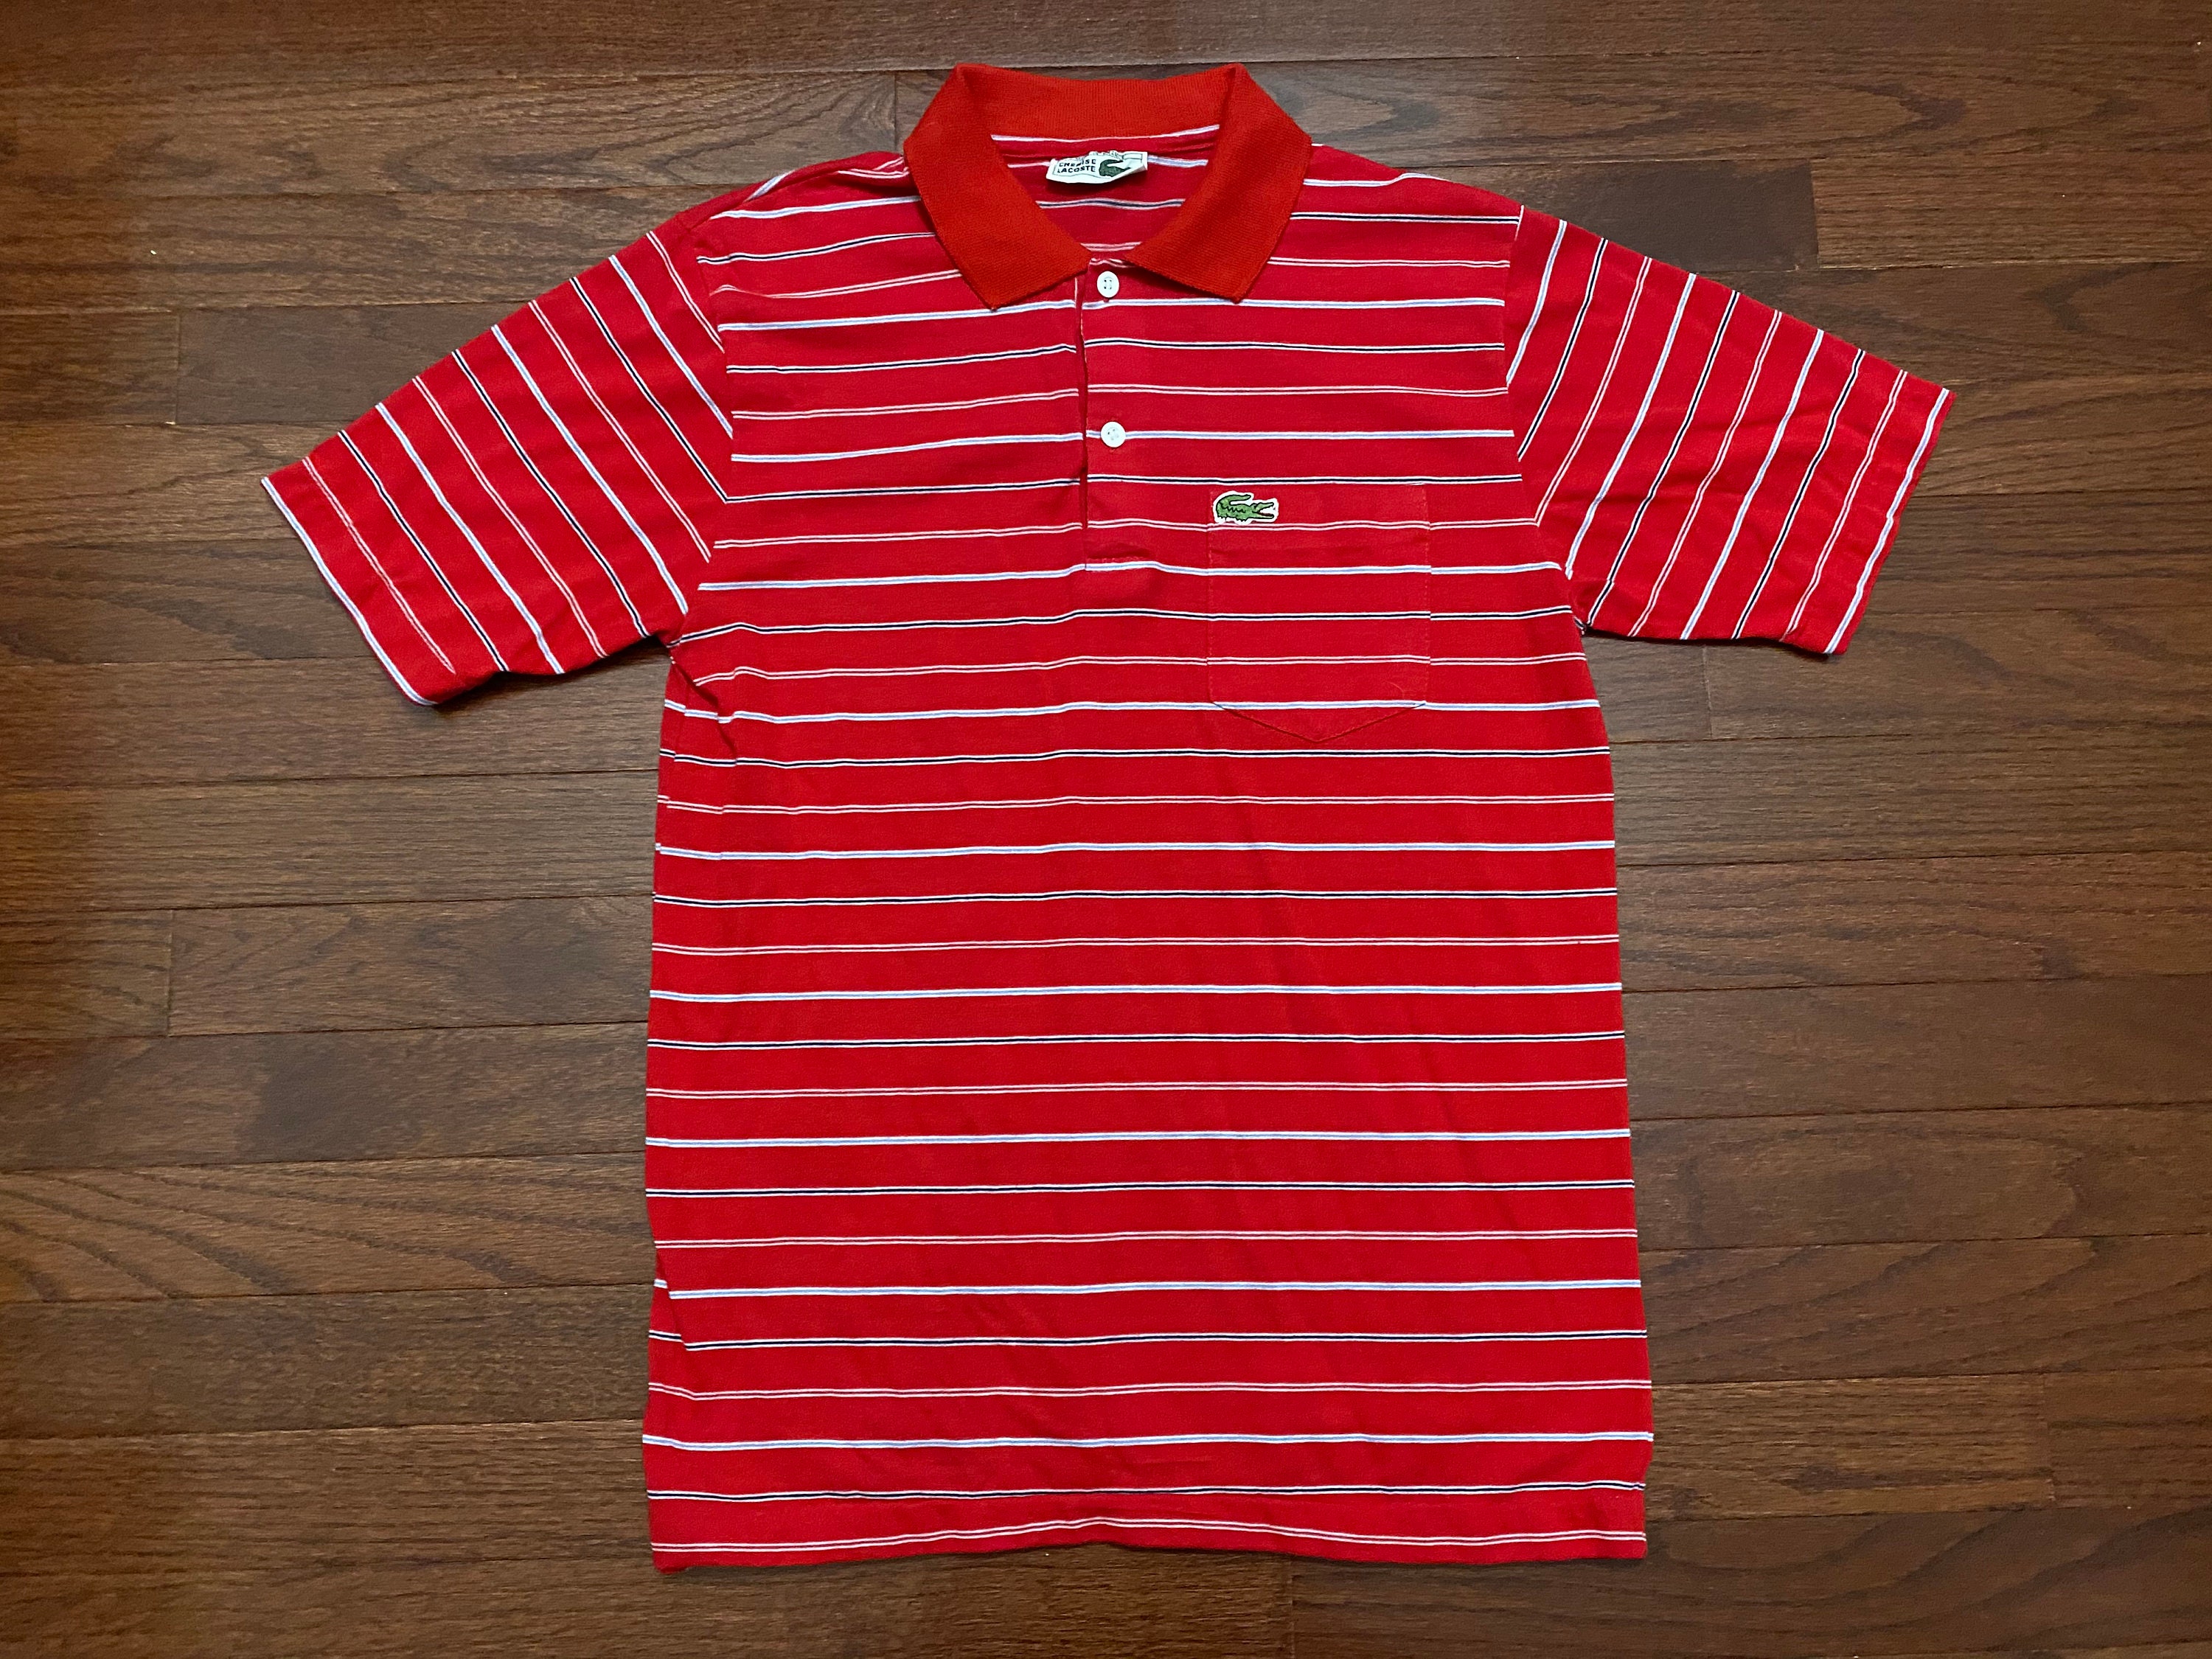 Retentie discretie Verkeersopstopping Medium Vintage Lacoste Polo Golf Shirt Red White Blue Striped - Etsy